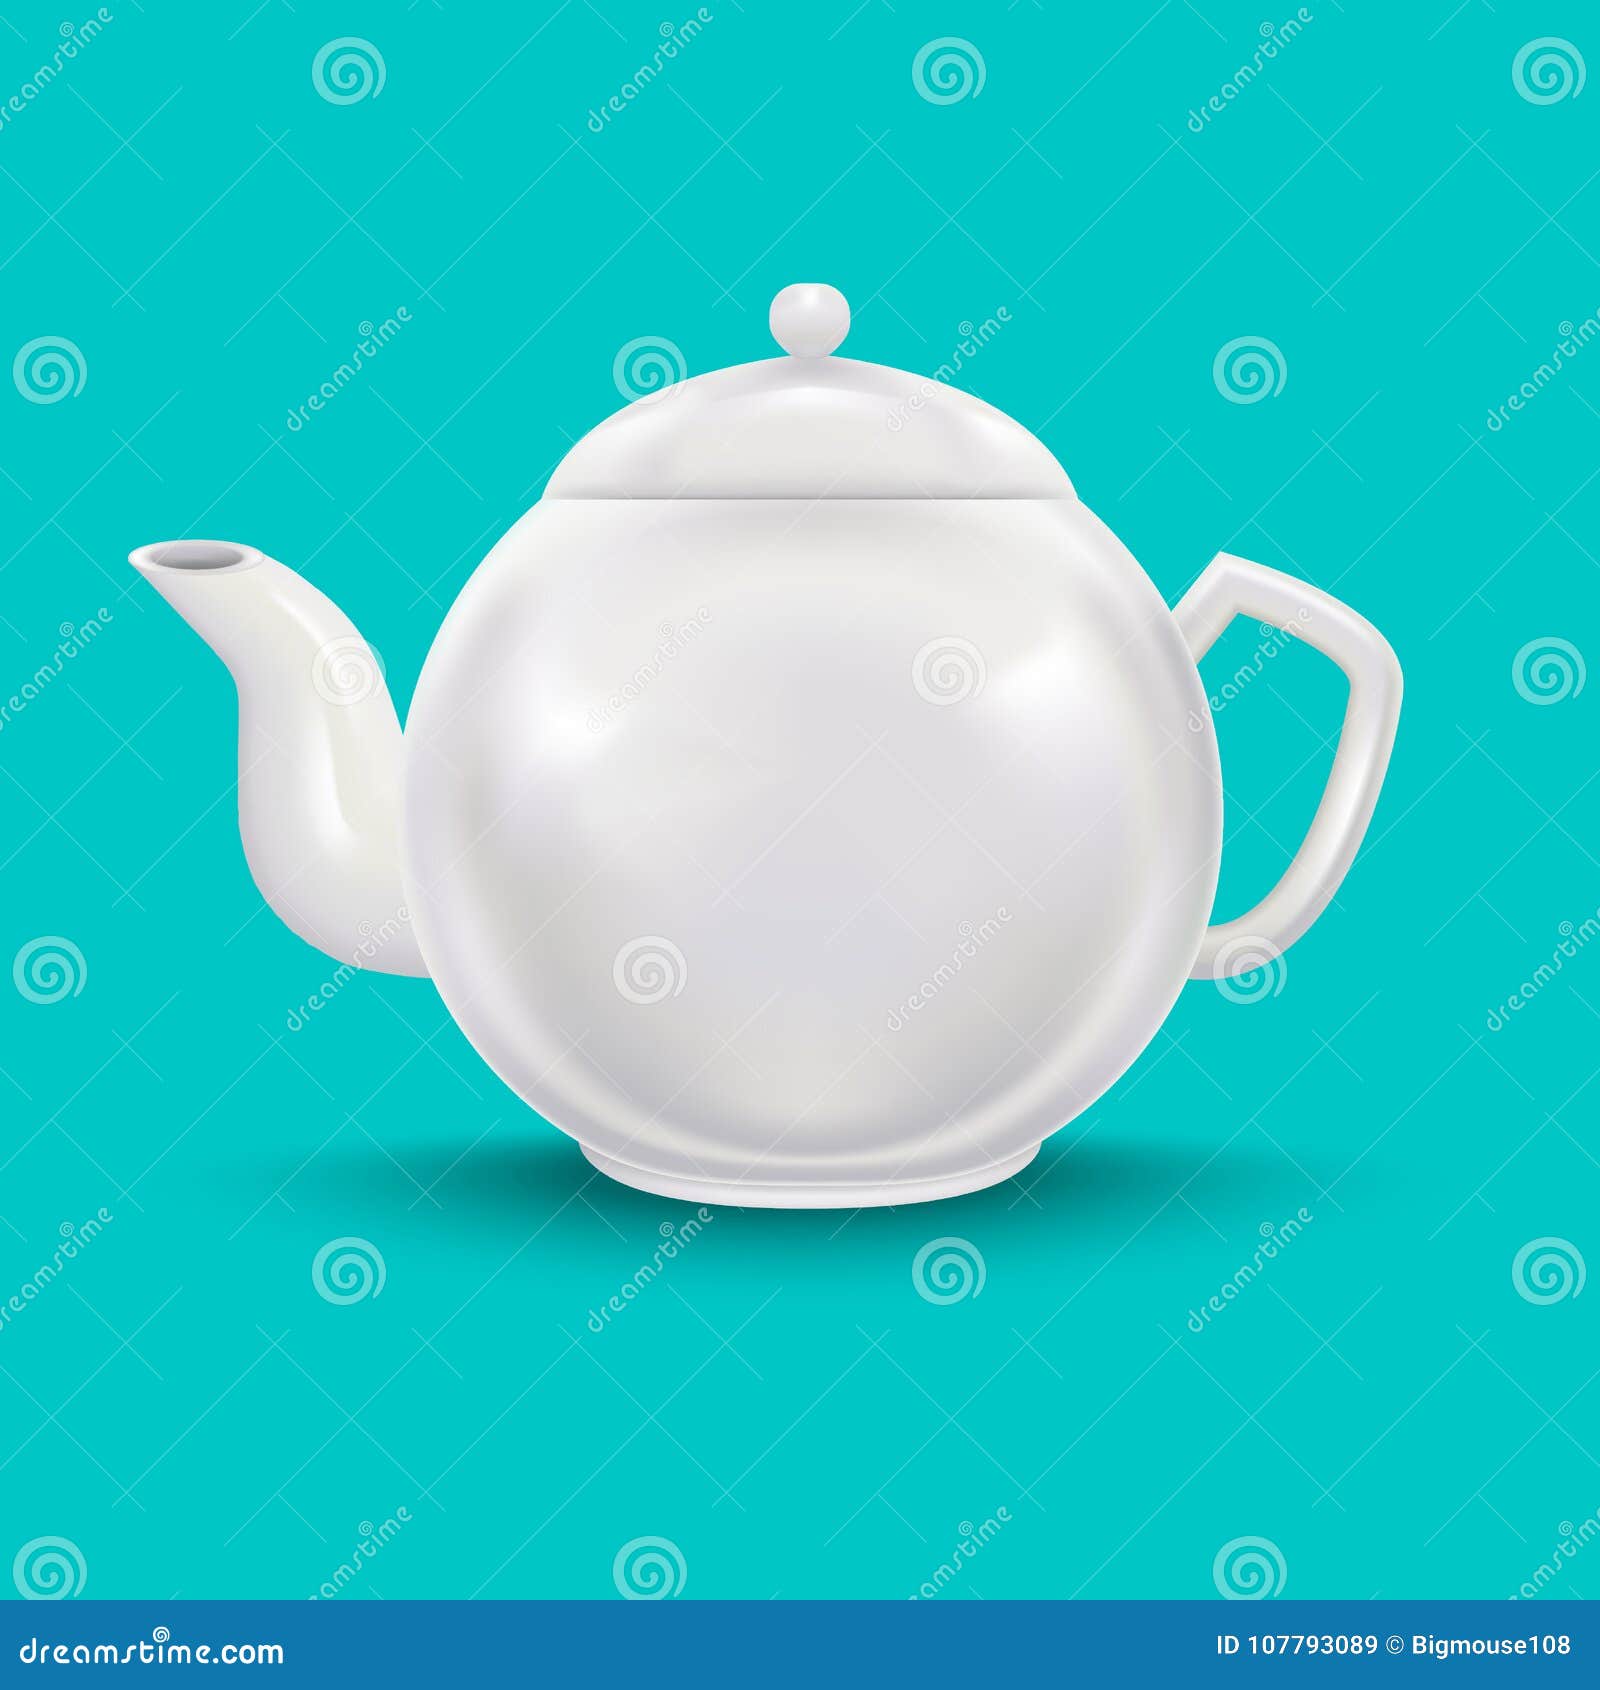 Download Realistic Detailed 3d Template Blank White Ceramic Teapot Mock Up Vector Stock Vector Illustration Of Element Porcelain 107793089